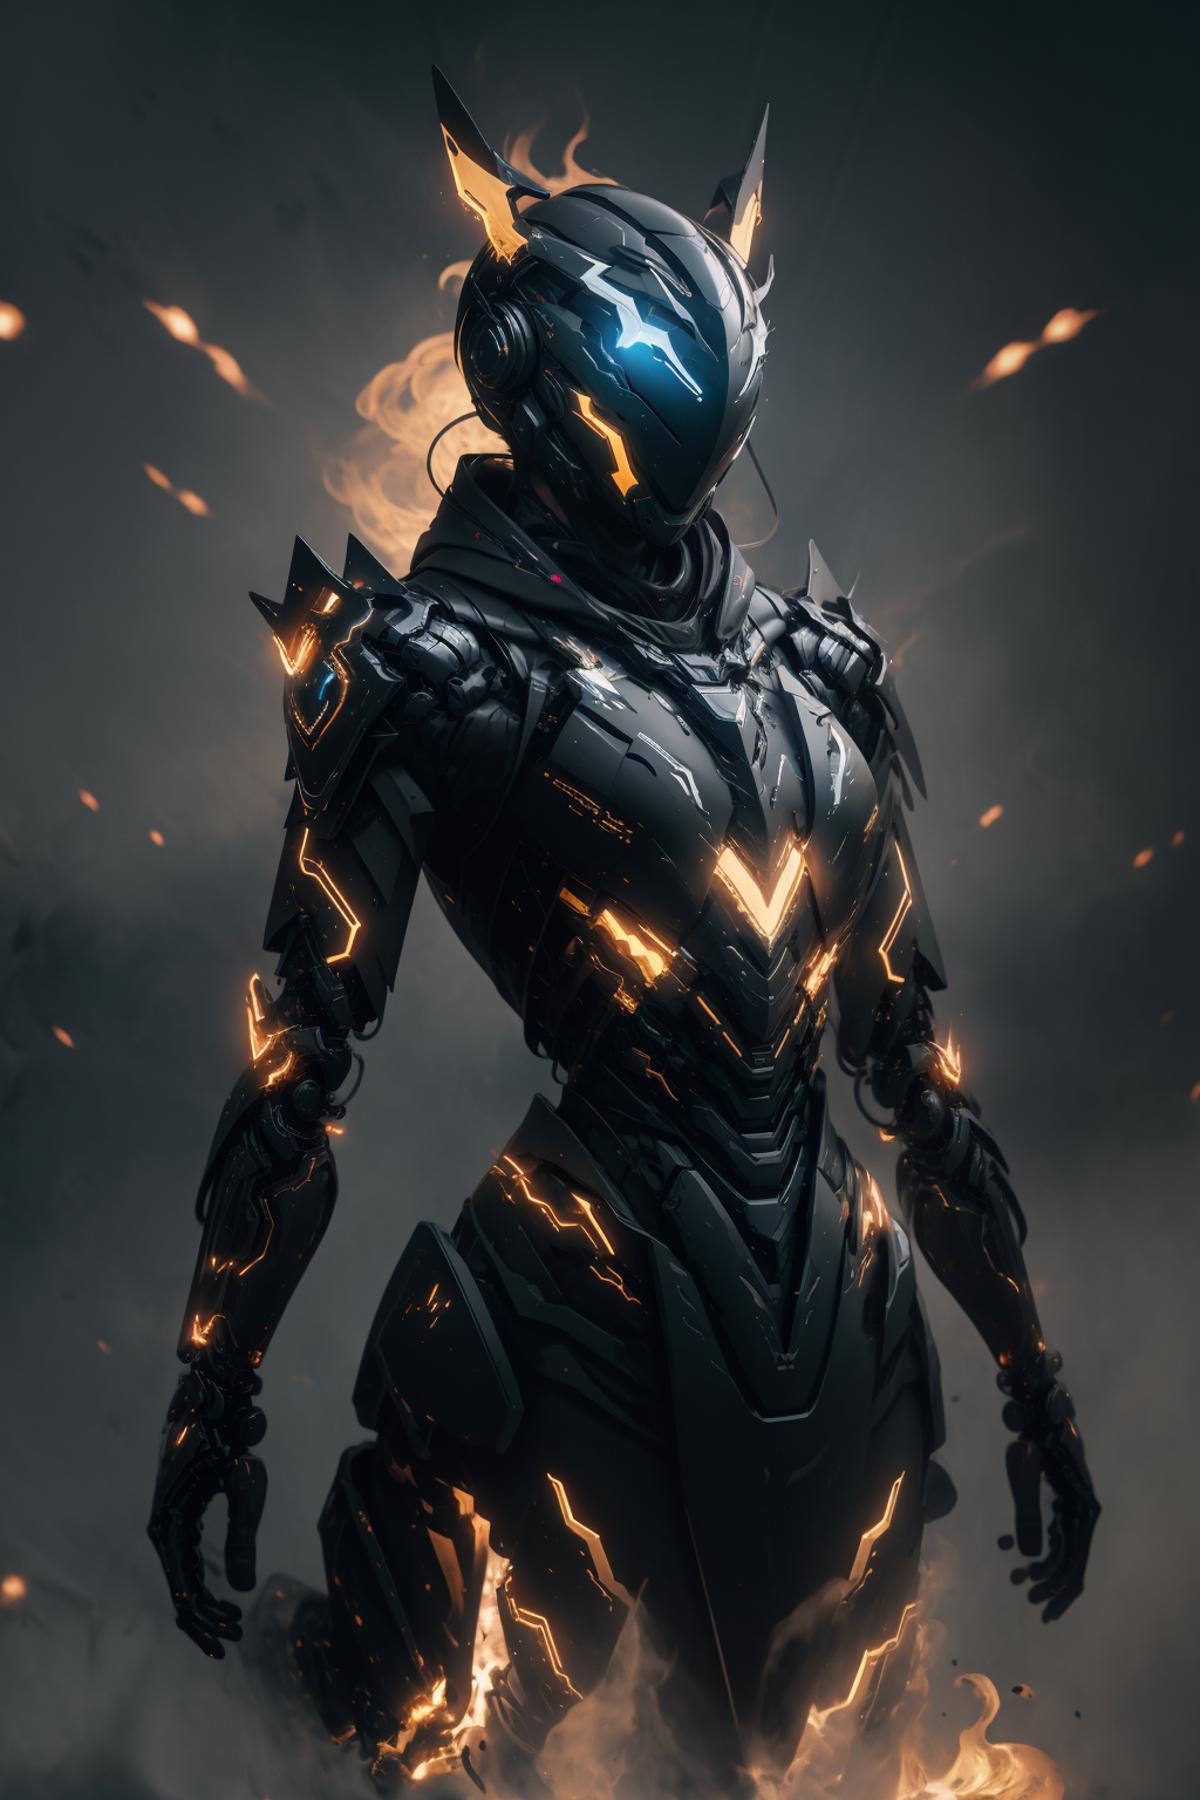 Mechanical Suit image by Kejolong